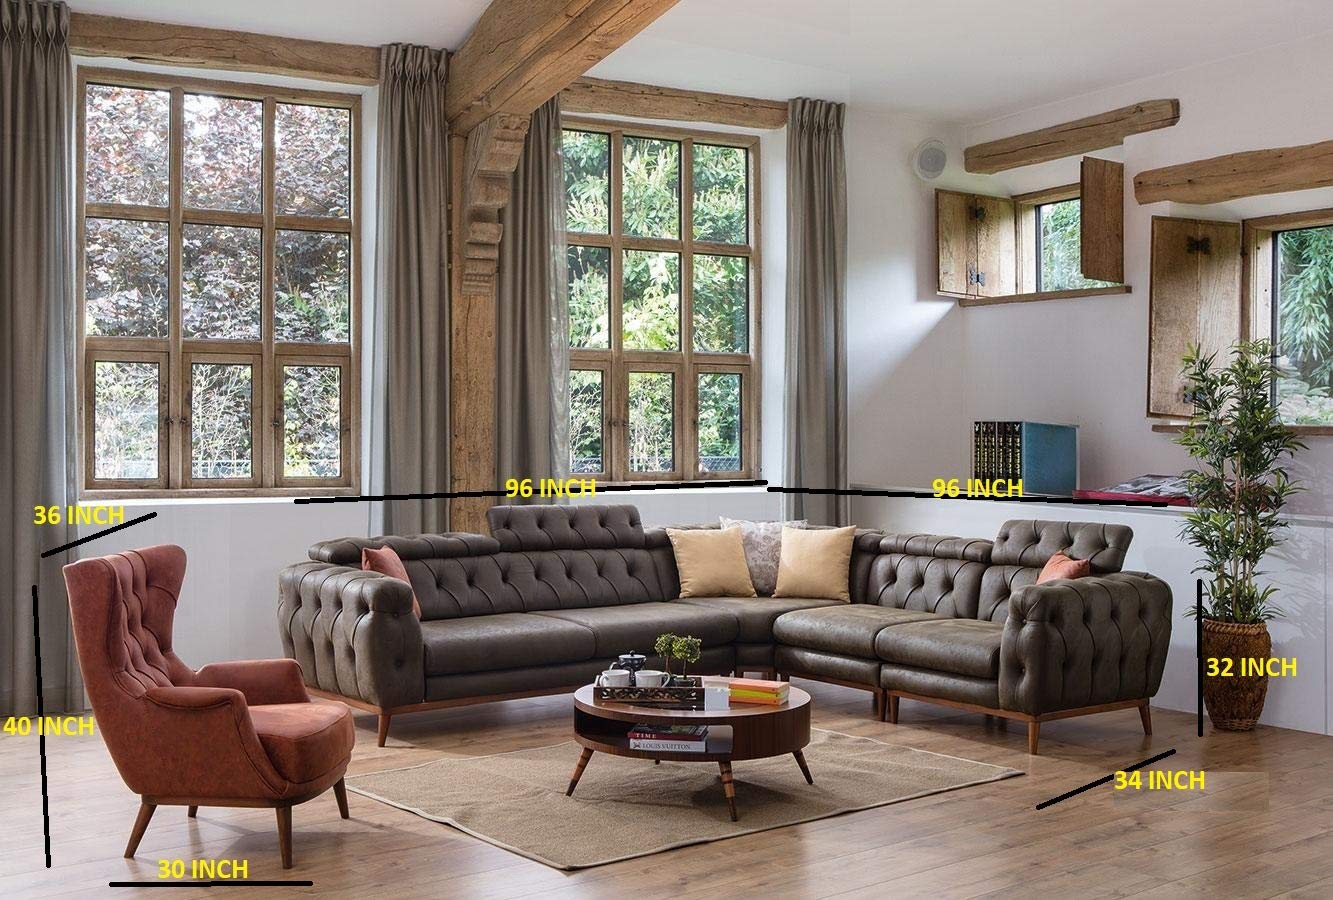 Designer Sofa Set:- Mastercraft L Shape Suede Fabric Corner Luxury FurnitureSofa Set and Wing Chair (Brown)